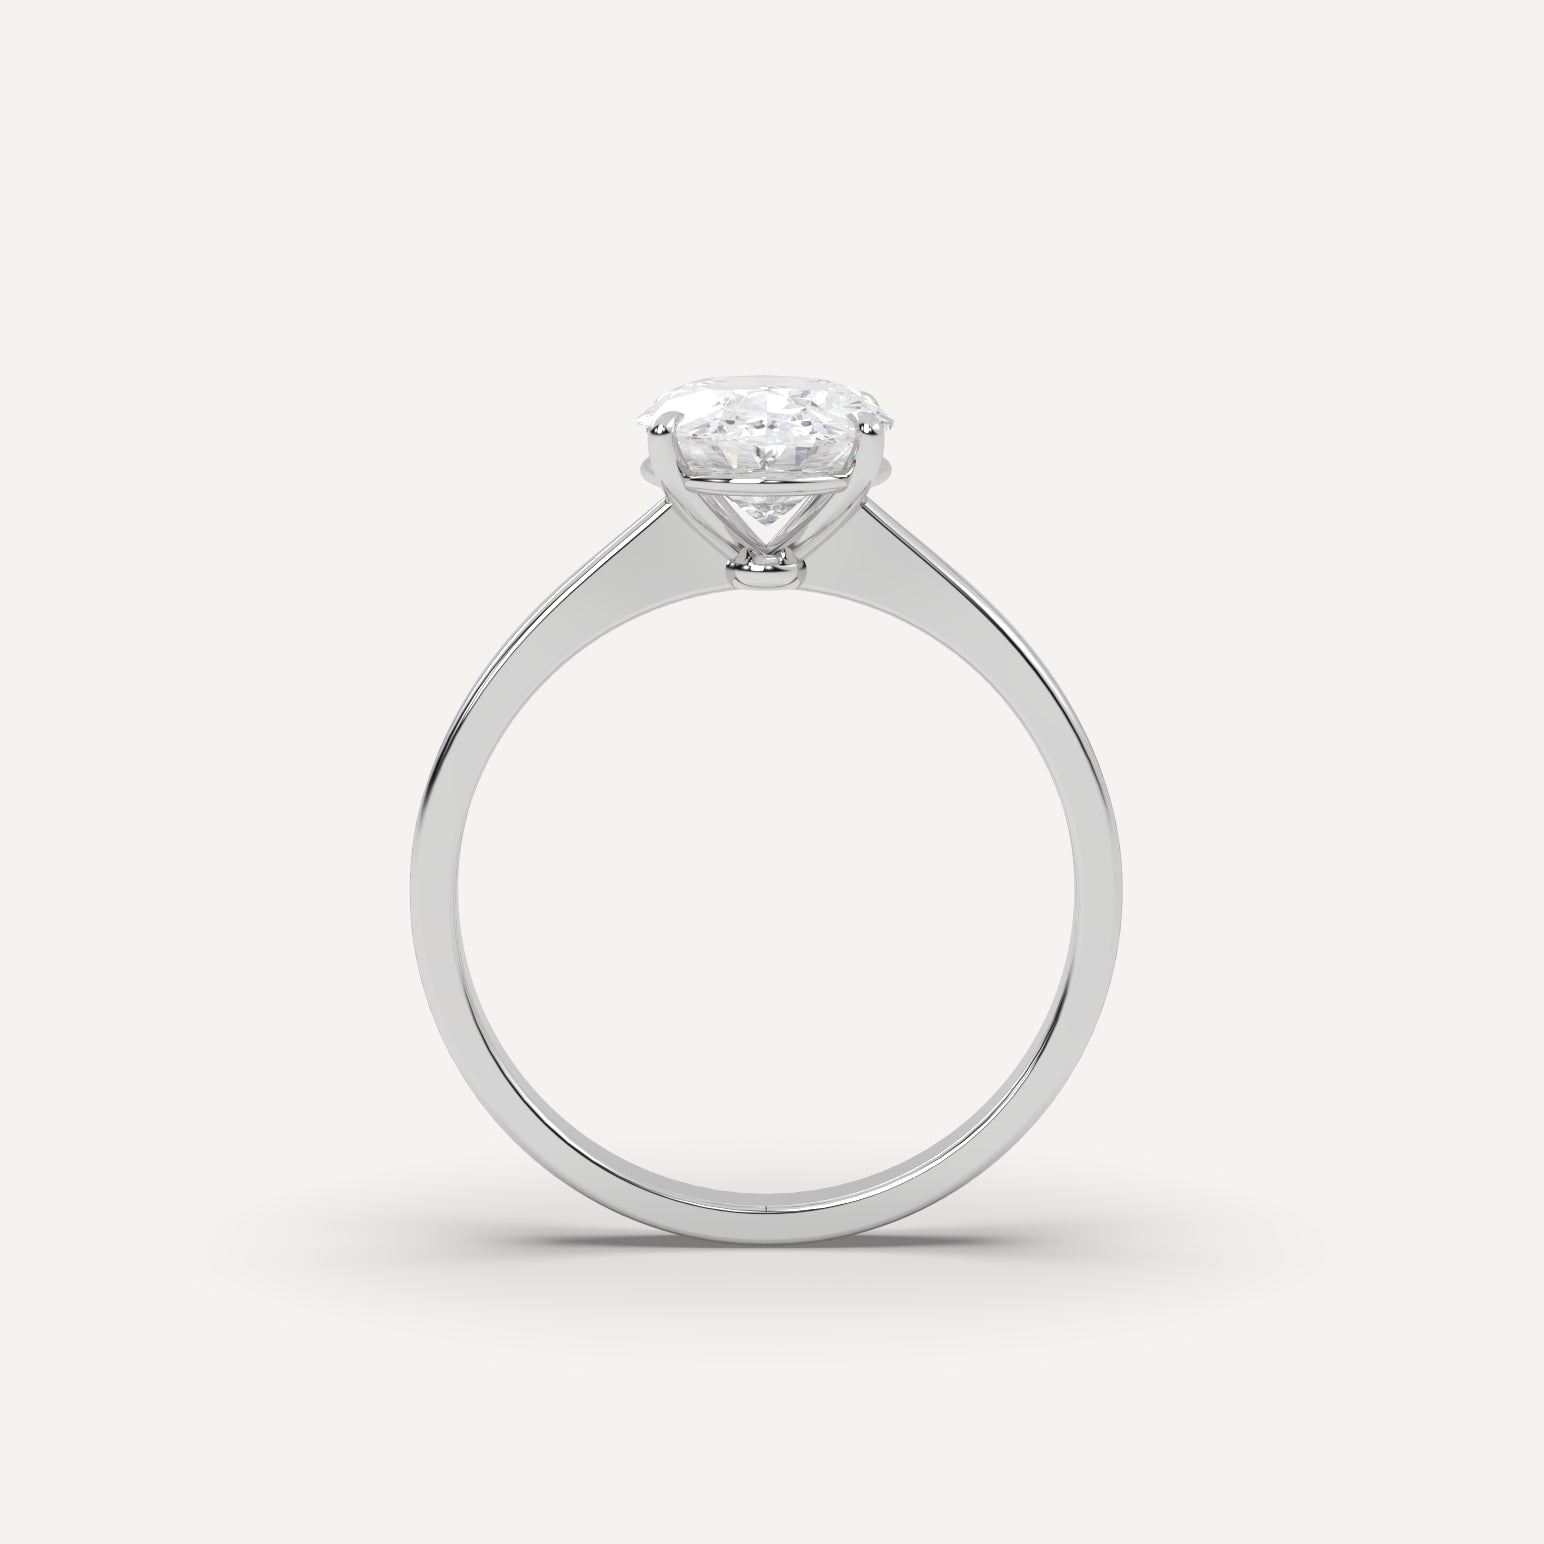 Oval Cut Diamond Engagement Ring - 2 carat